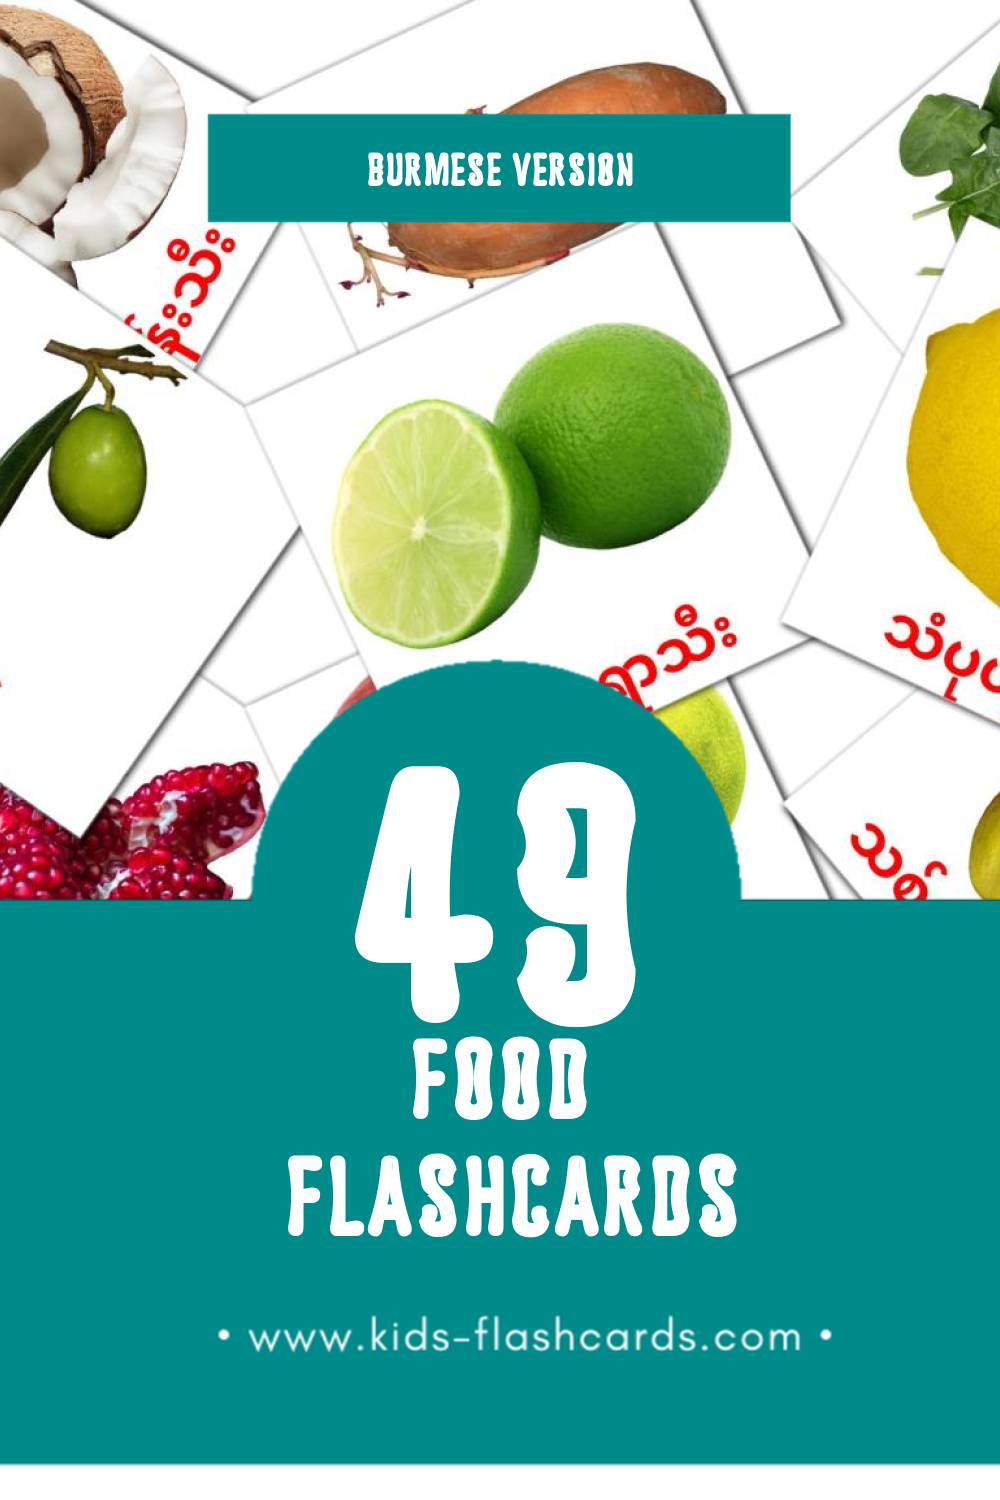 Visual အစားအသောက် Flashcards for Toddlers (49 cards in Burmese)